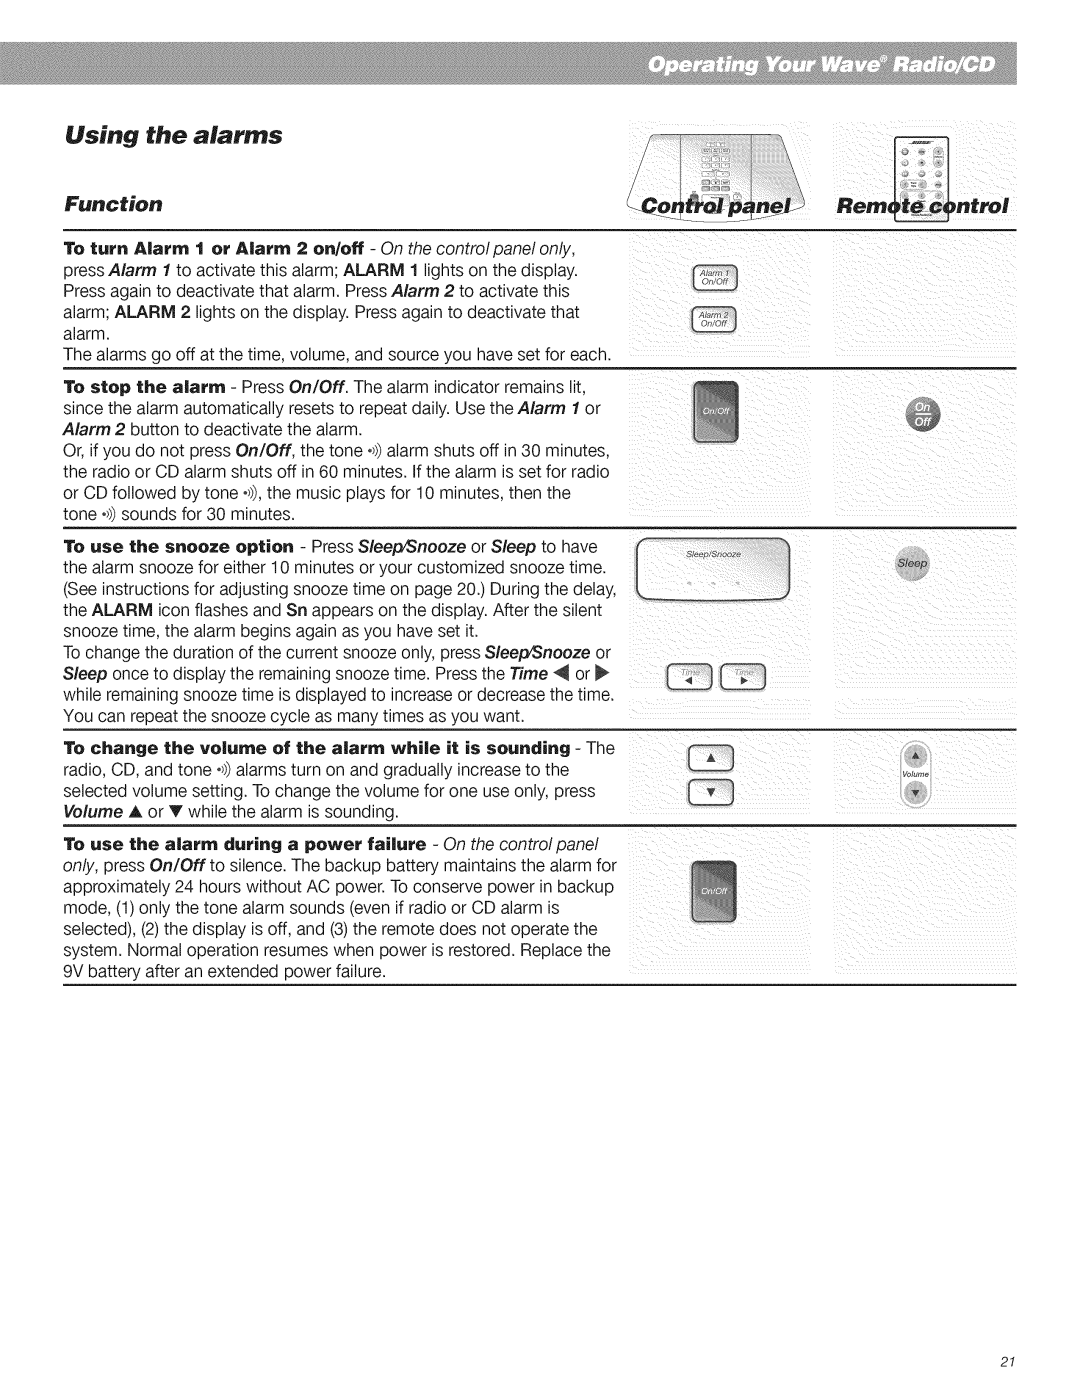 Bose CD Player manual Using the alarms 